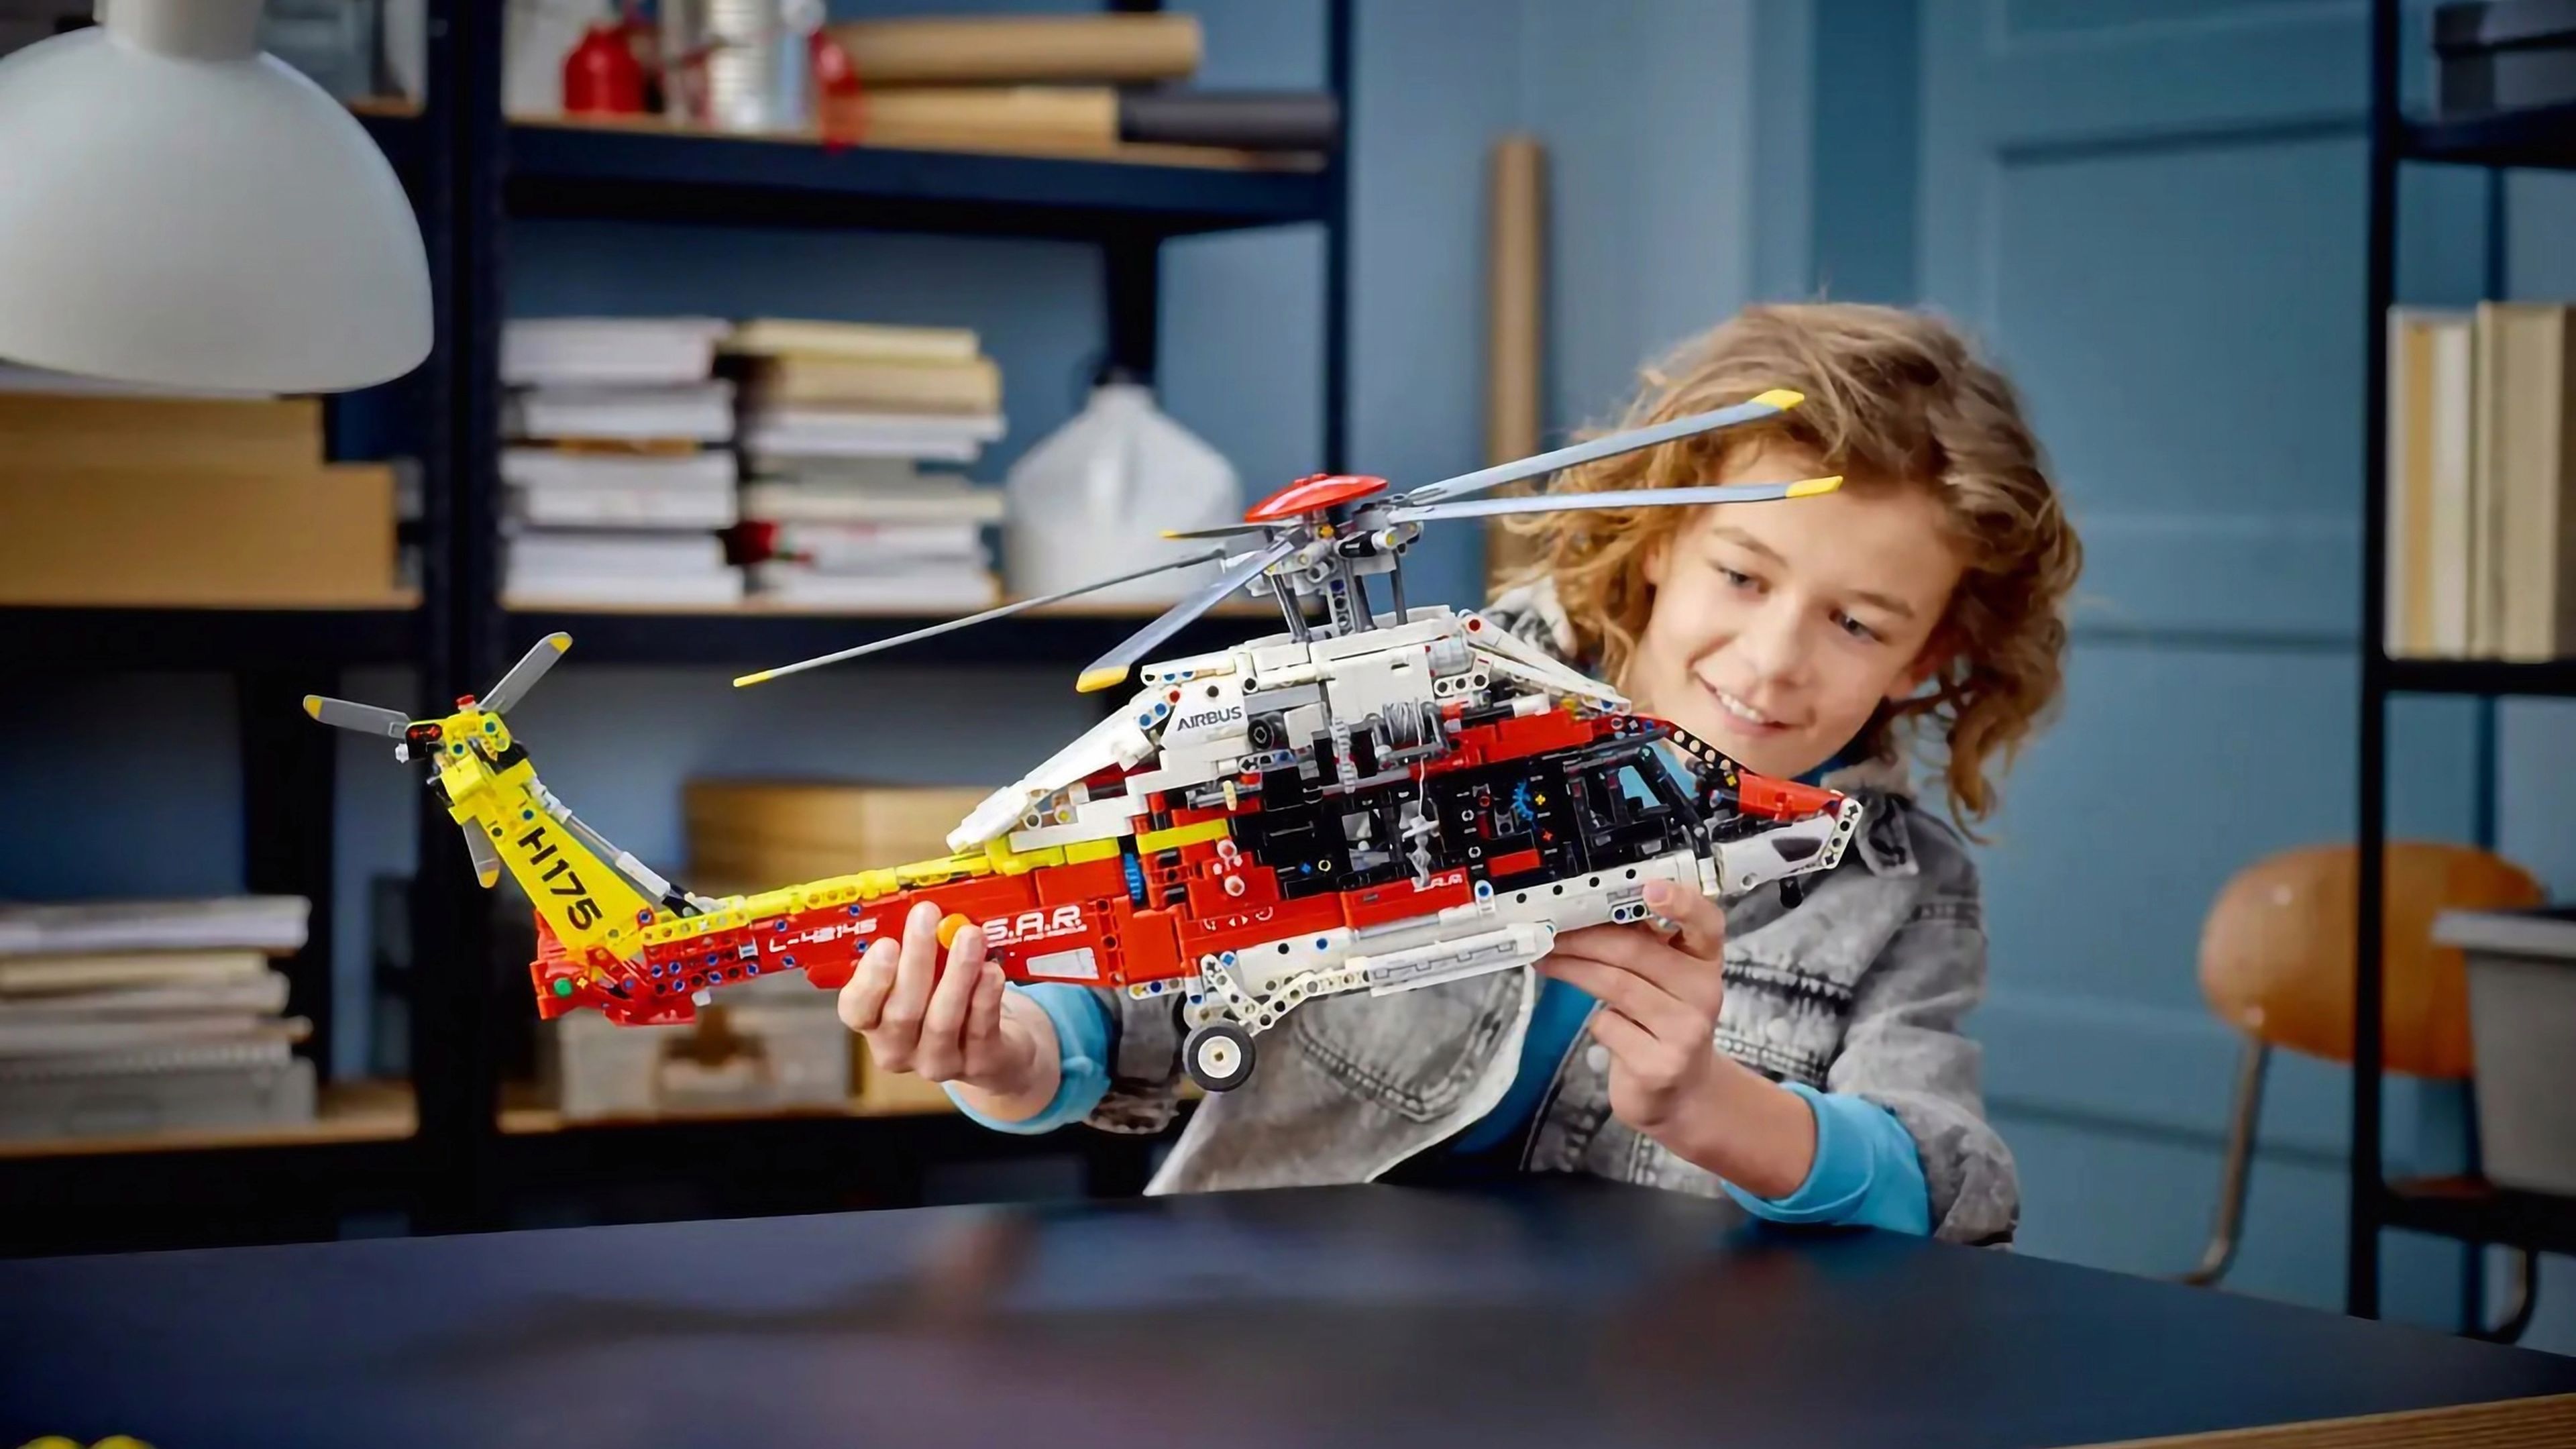 LEGO Technic Helicóptero de Rescate Airbus H175